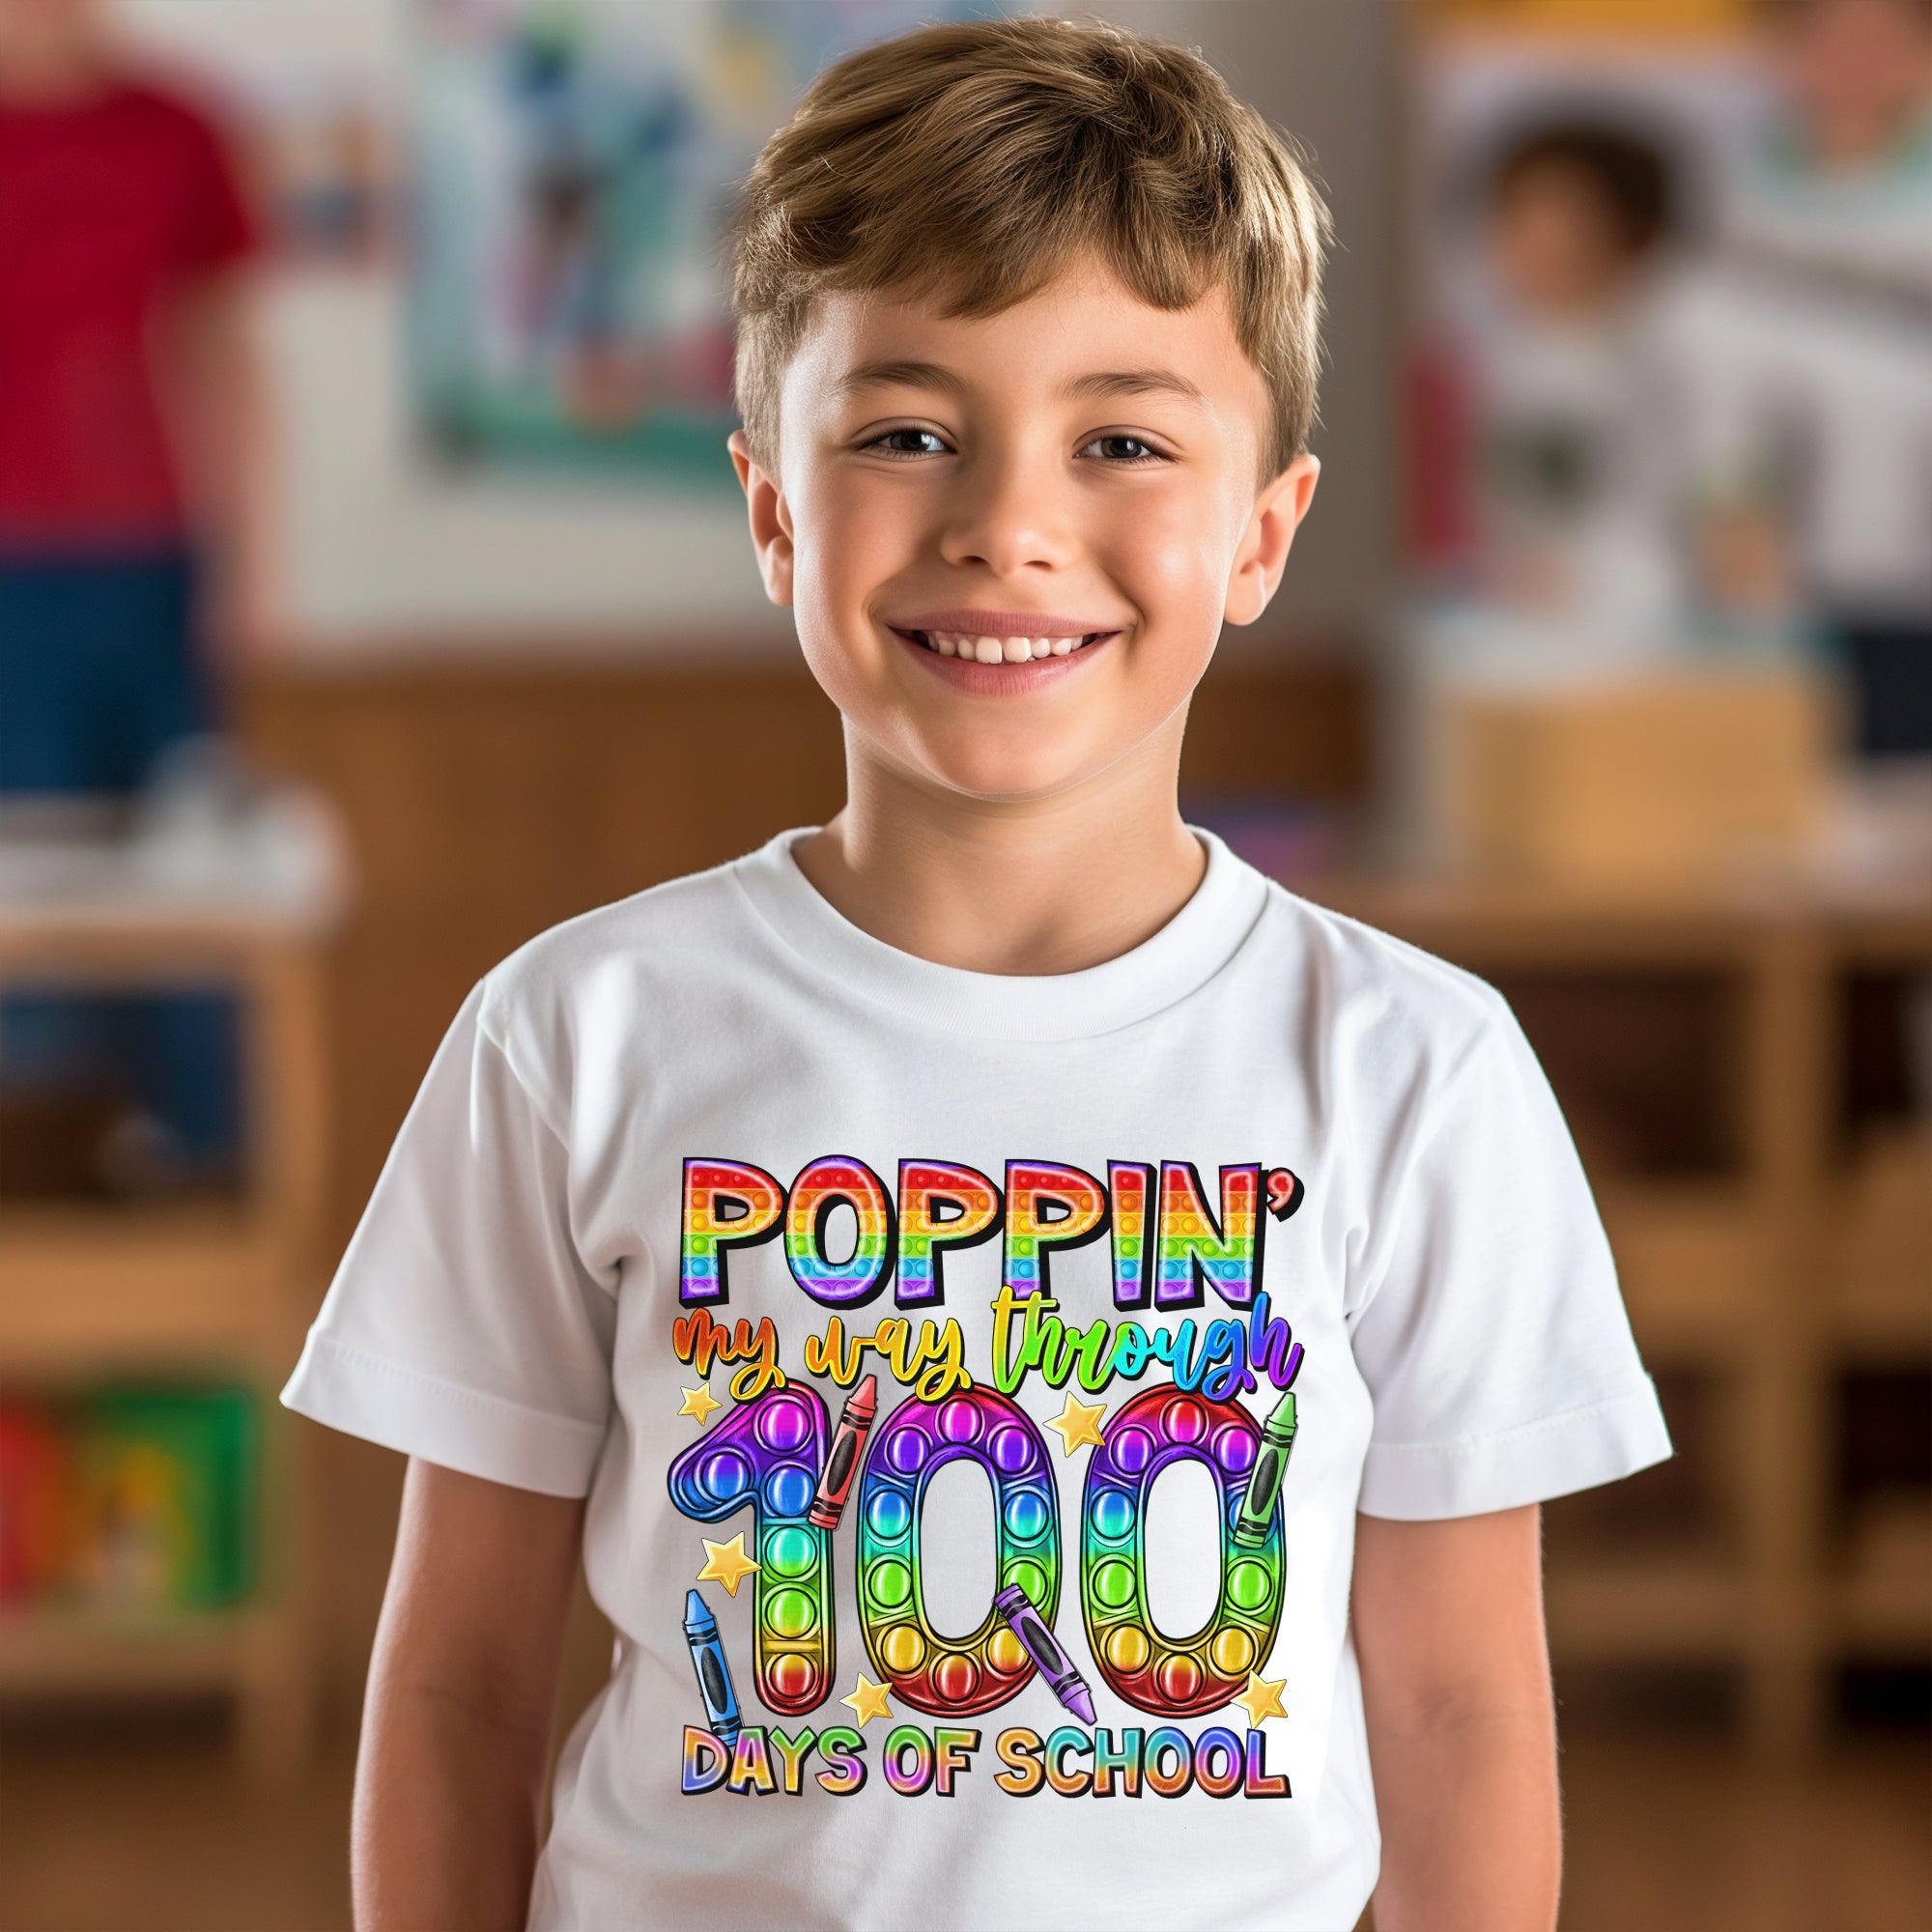 100 Days of School Kids T-Shirt 1168